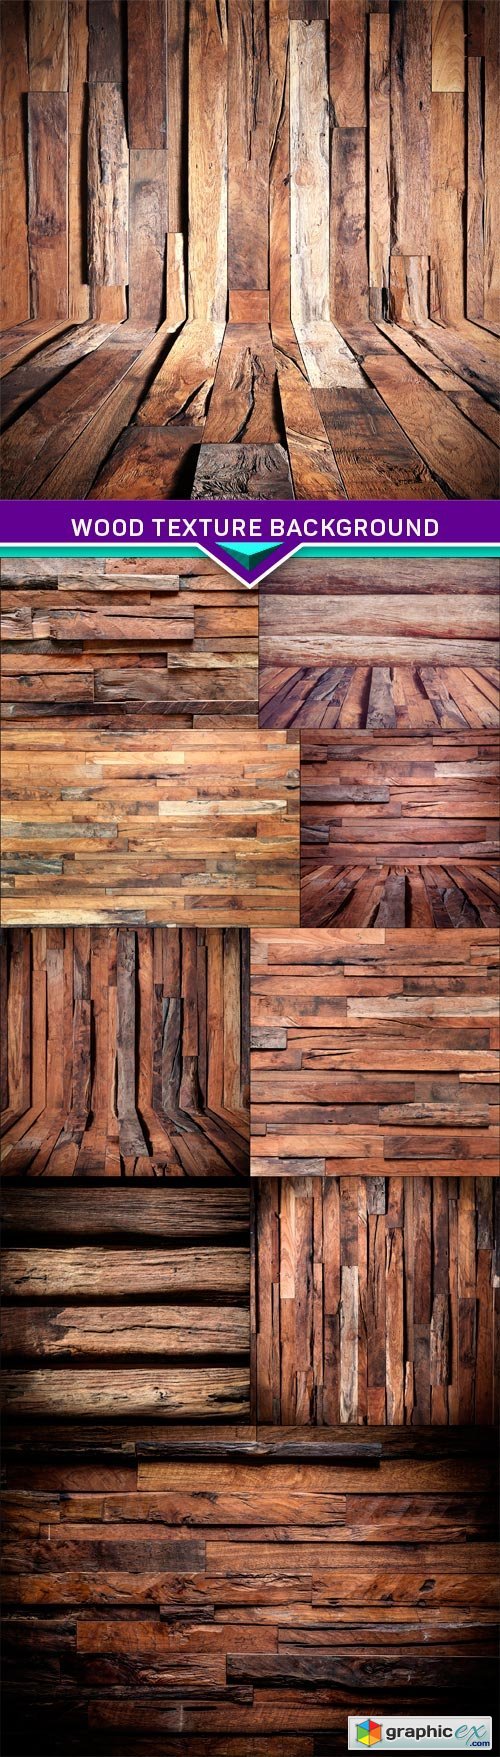 Wood texture background 10X JPEG